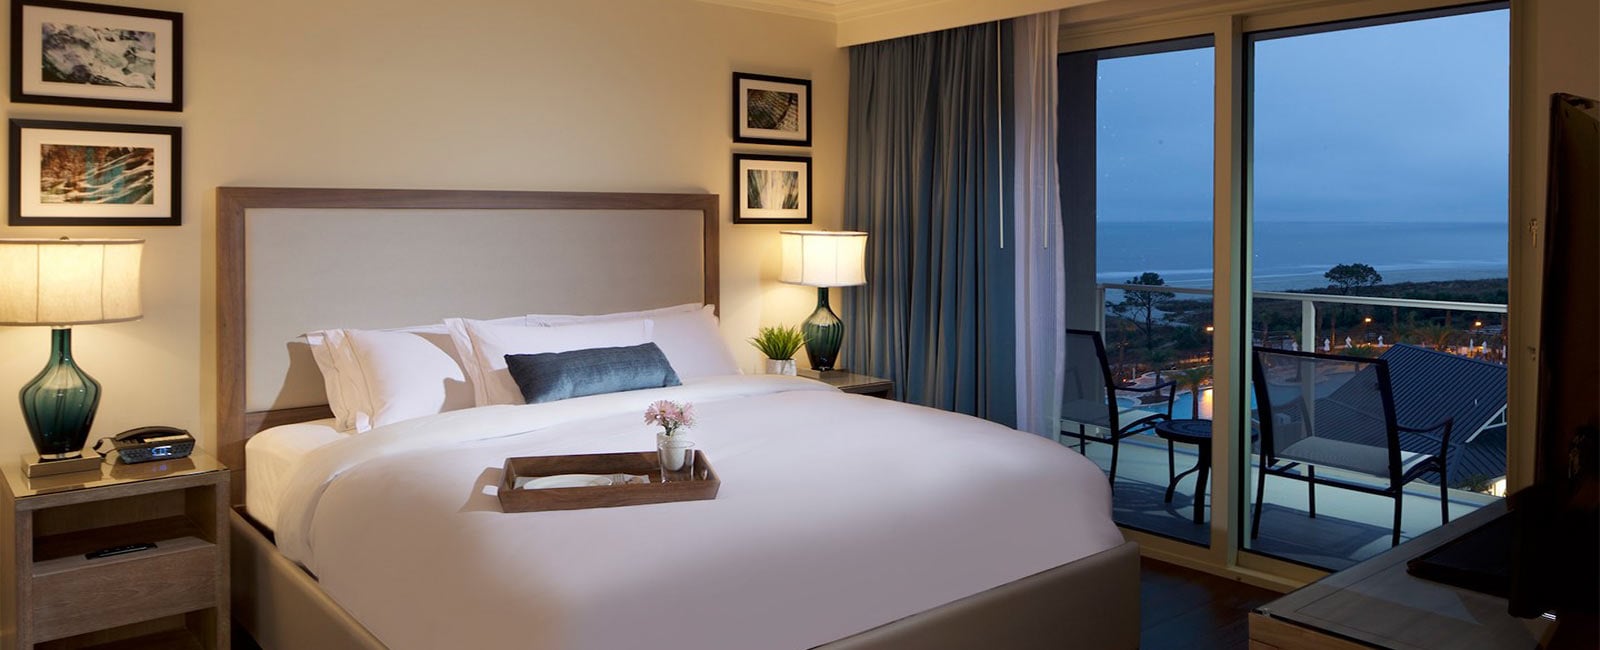 Bedroom at Ocean Oak Resort by Hilton Grand Vacations Club on Hilton Head Island, South Carolina